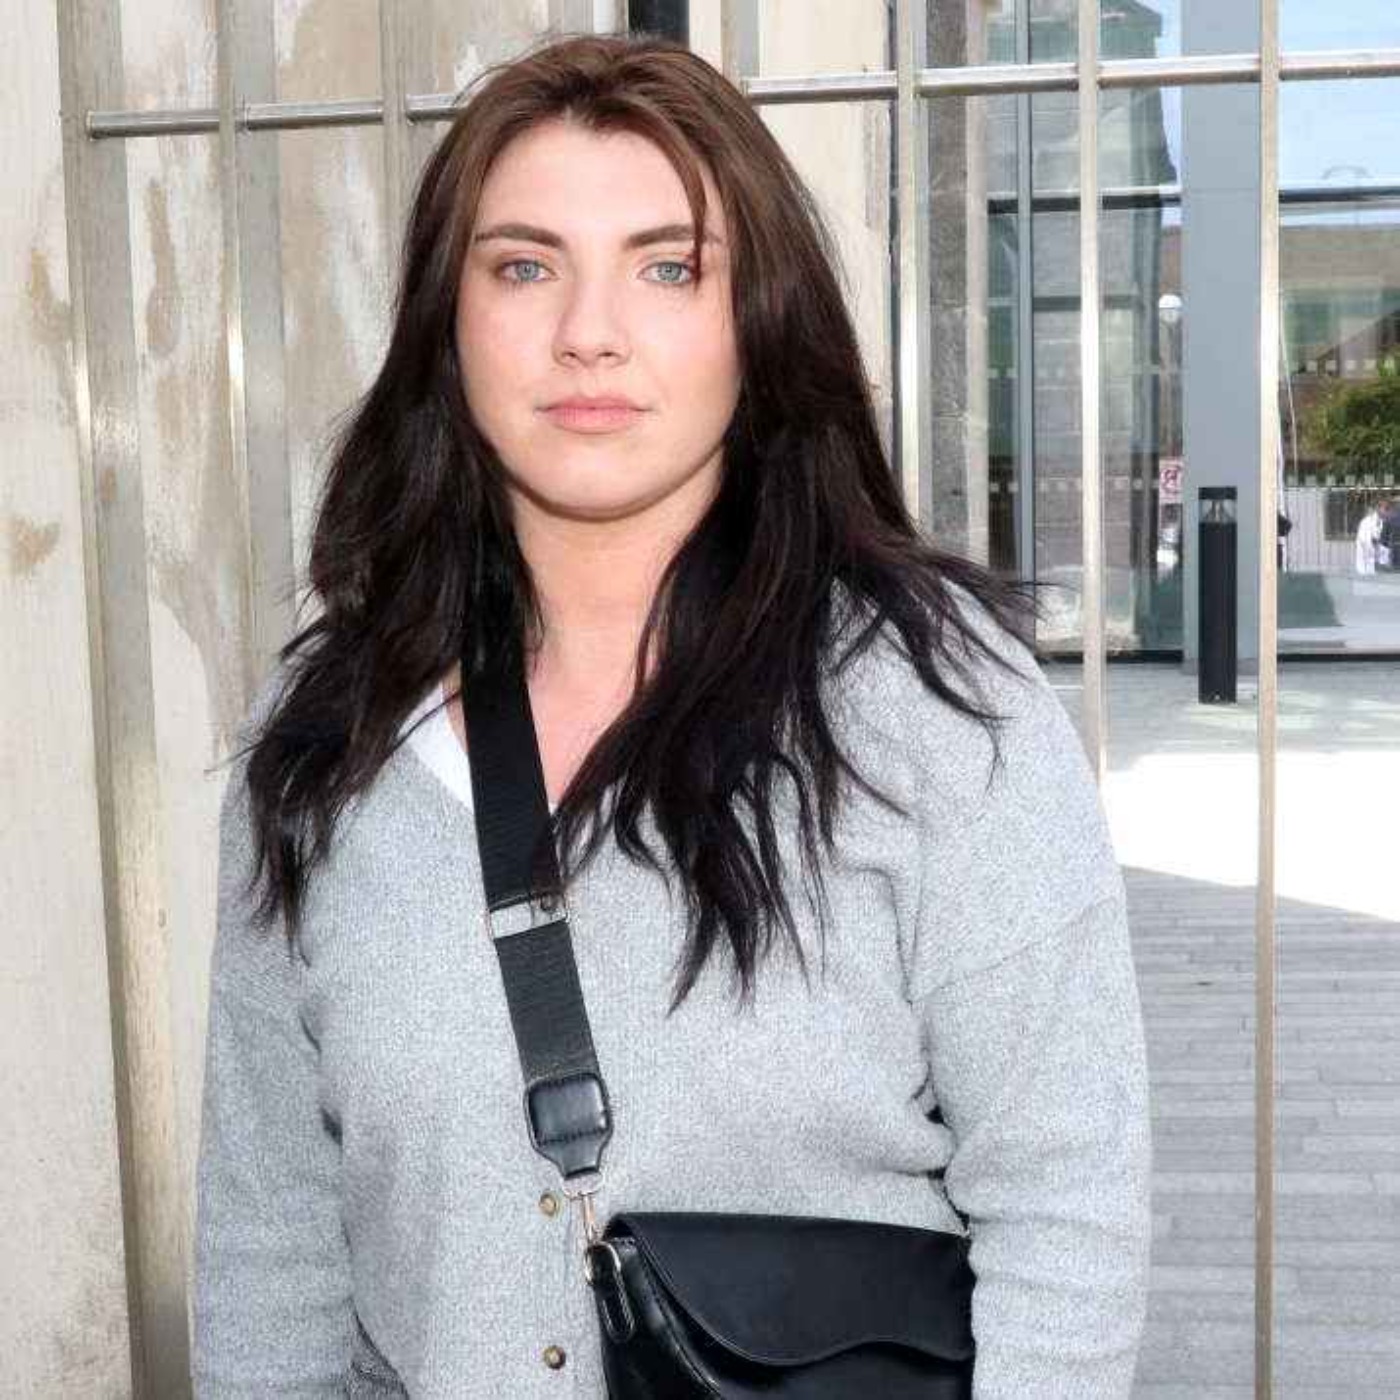 Limerick victim Natasha O'Brien says justice was not served